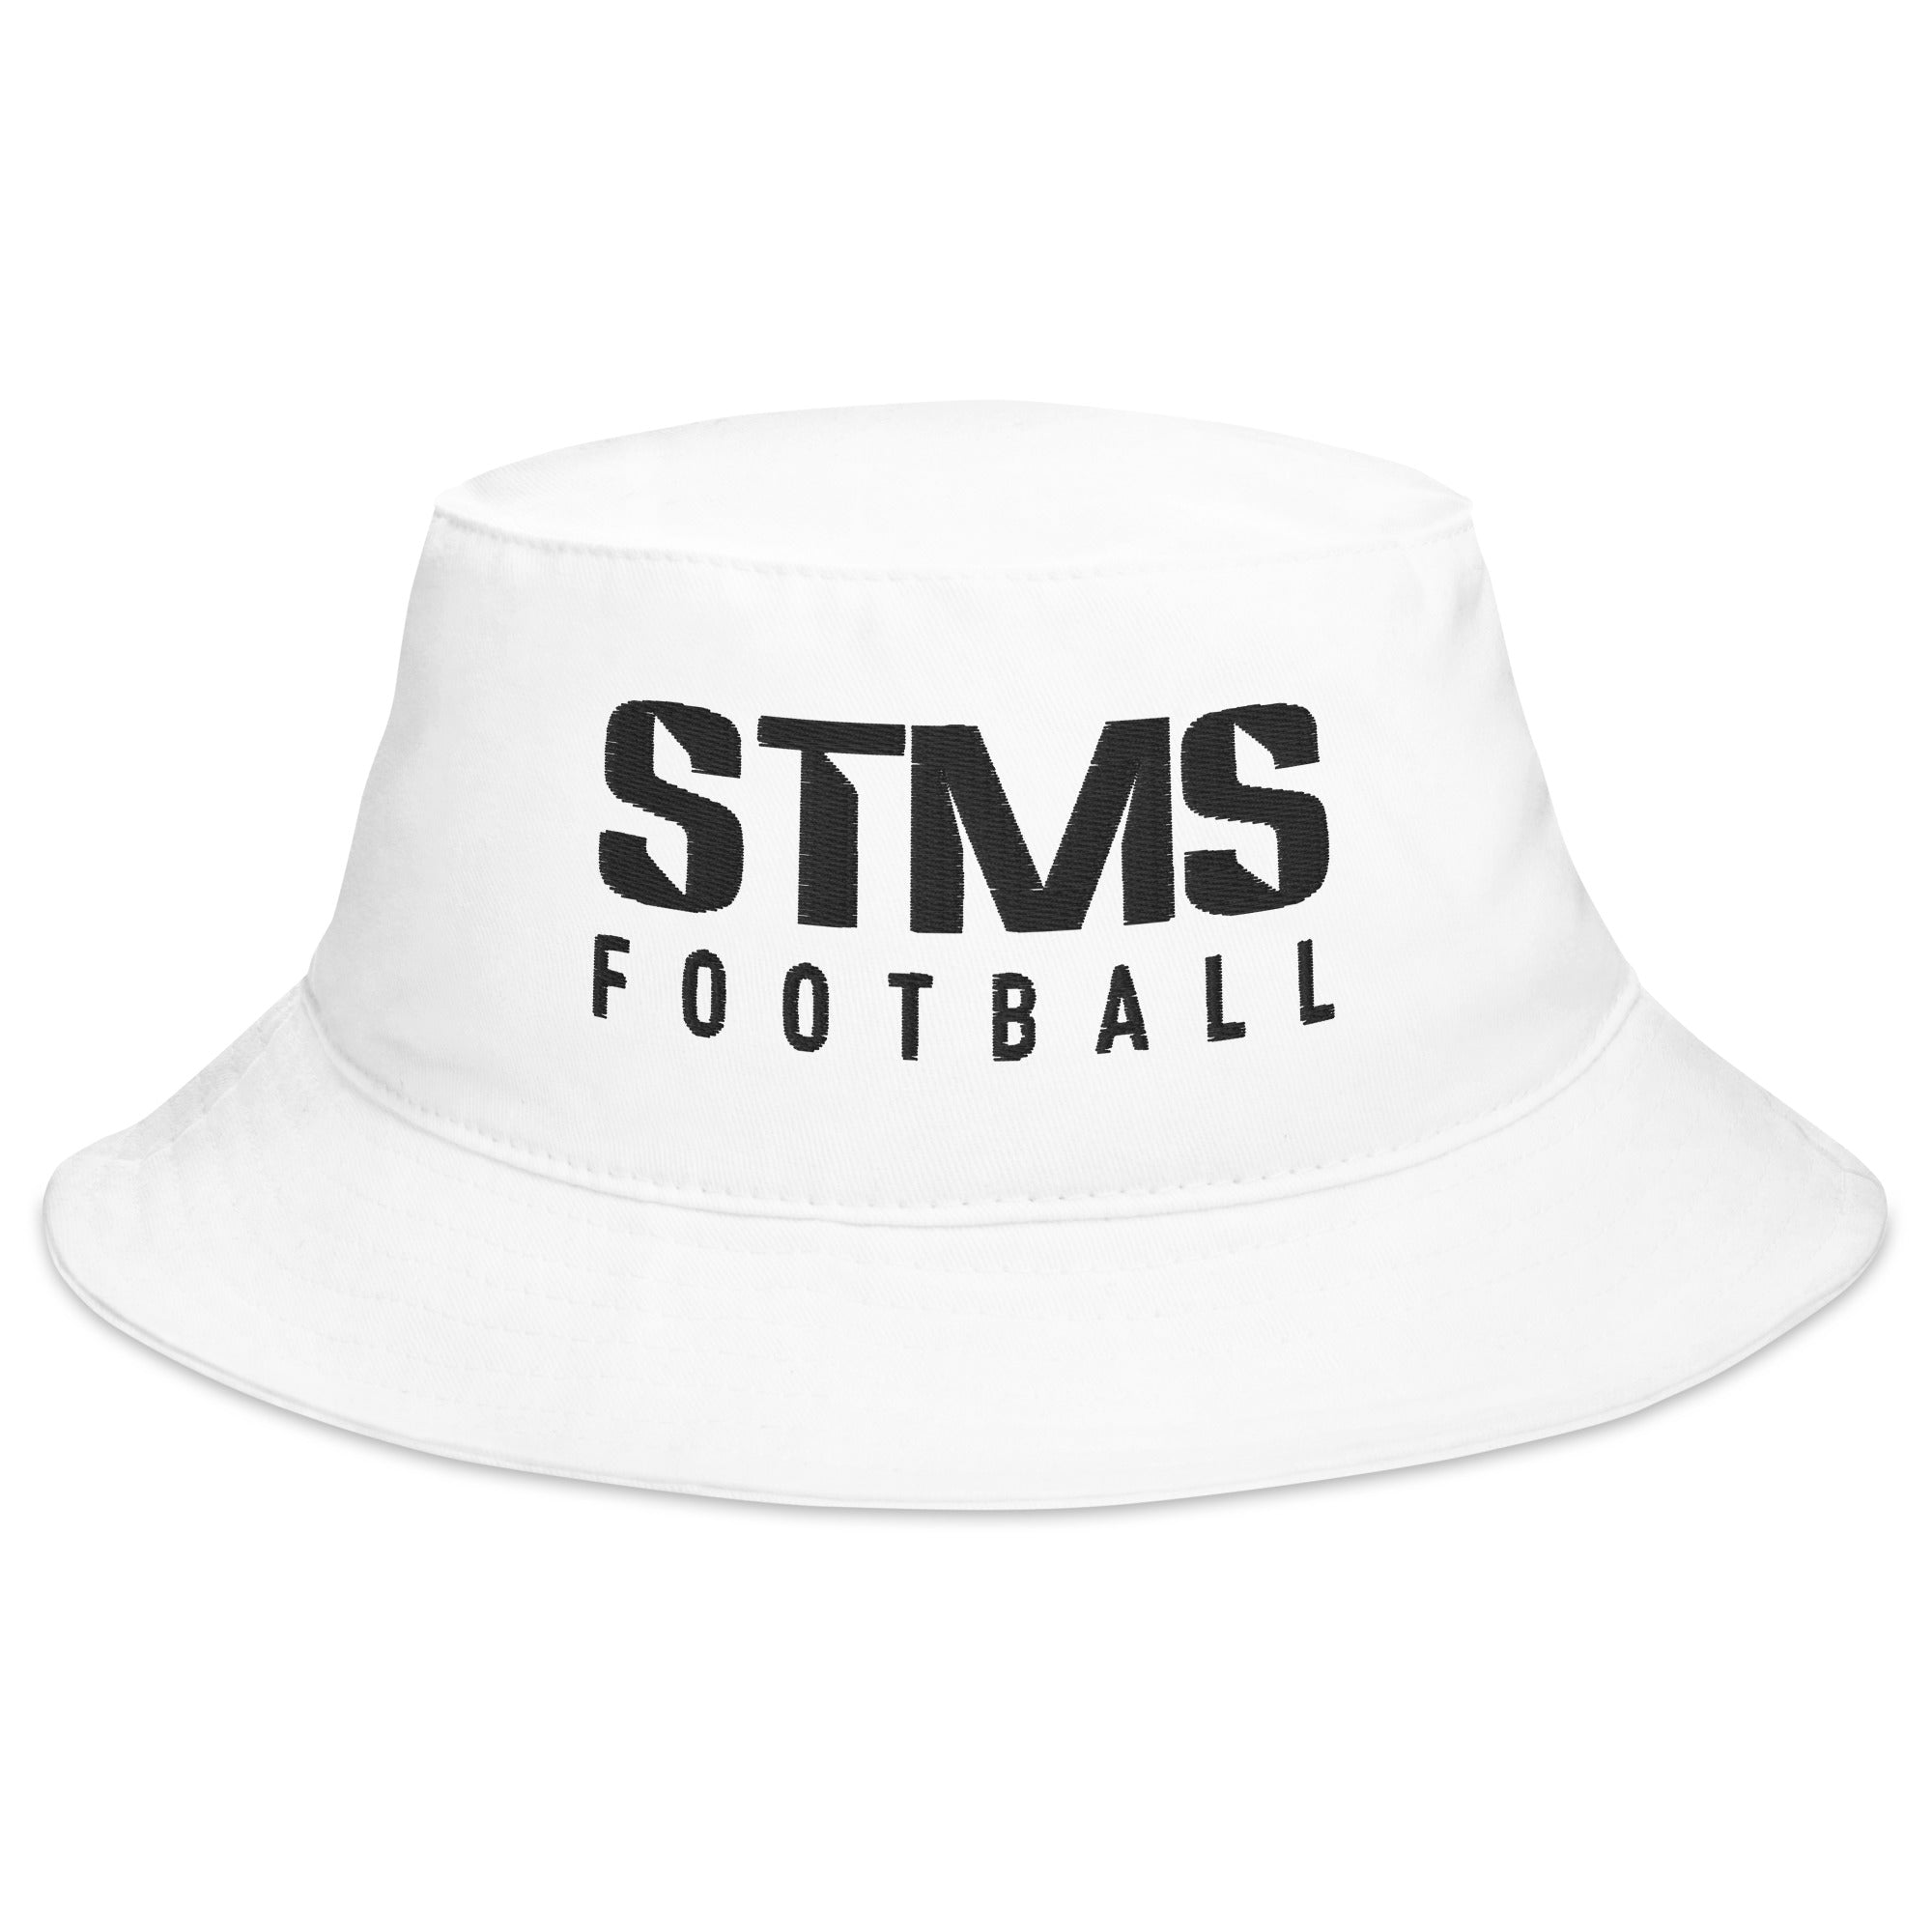 STMS Football Bucket Hat